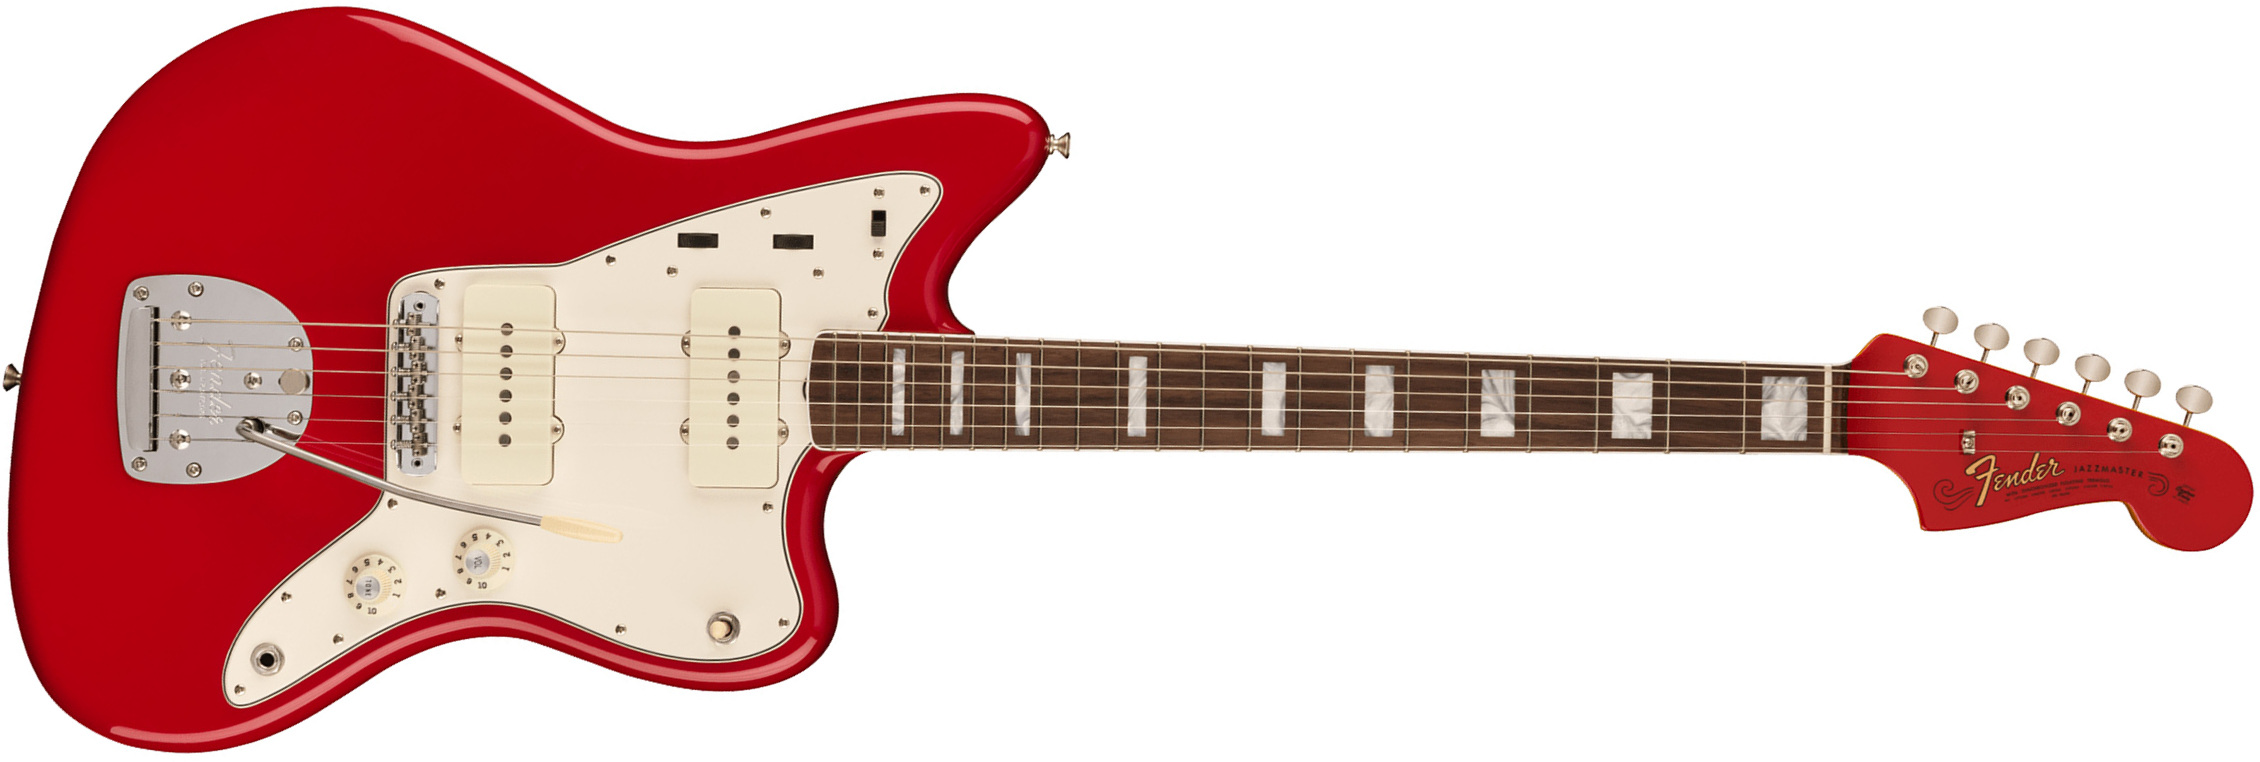 Fender Jazzmaster 1966 American Vintage Ii Usa Sh Trem Rw - Dakota Red - Guitarra electrica retro rock - Main picture